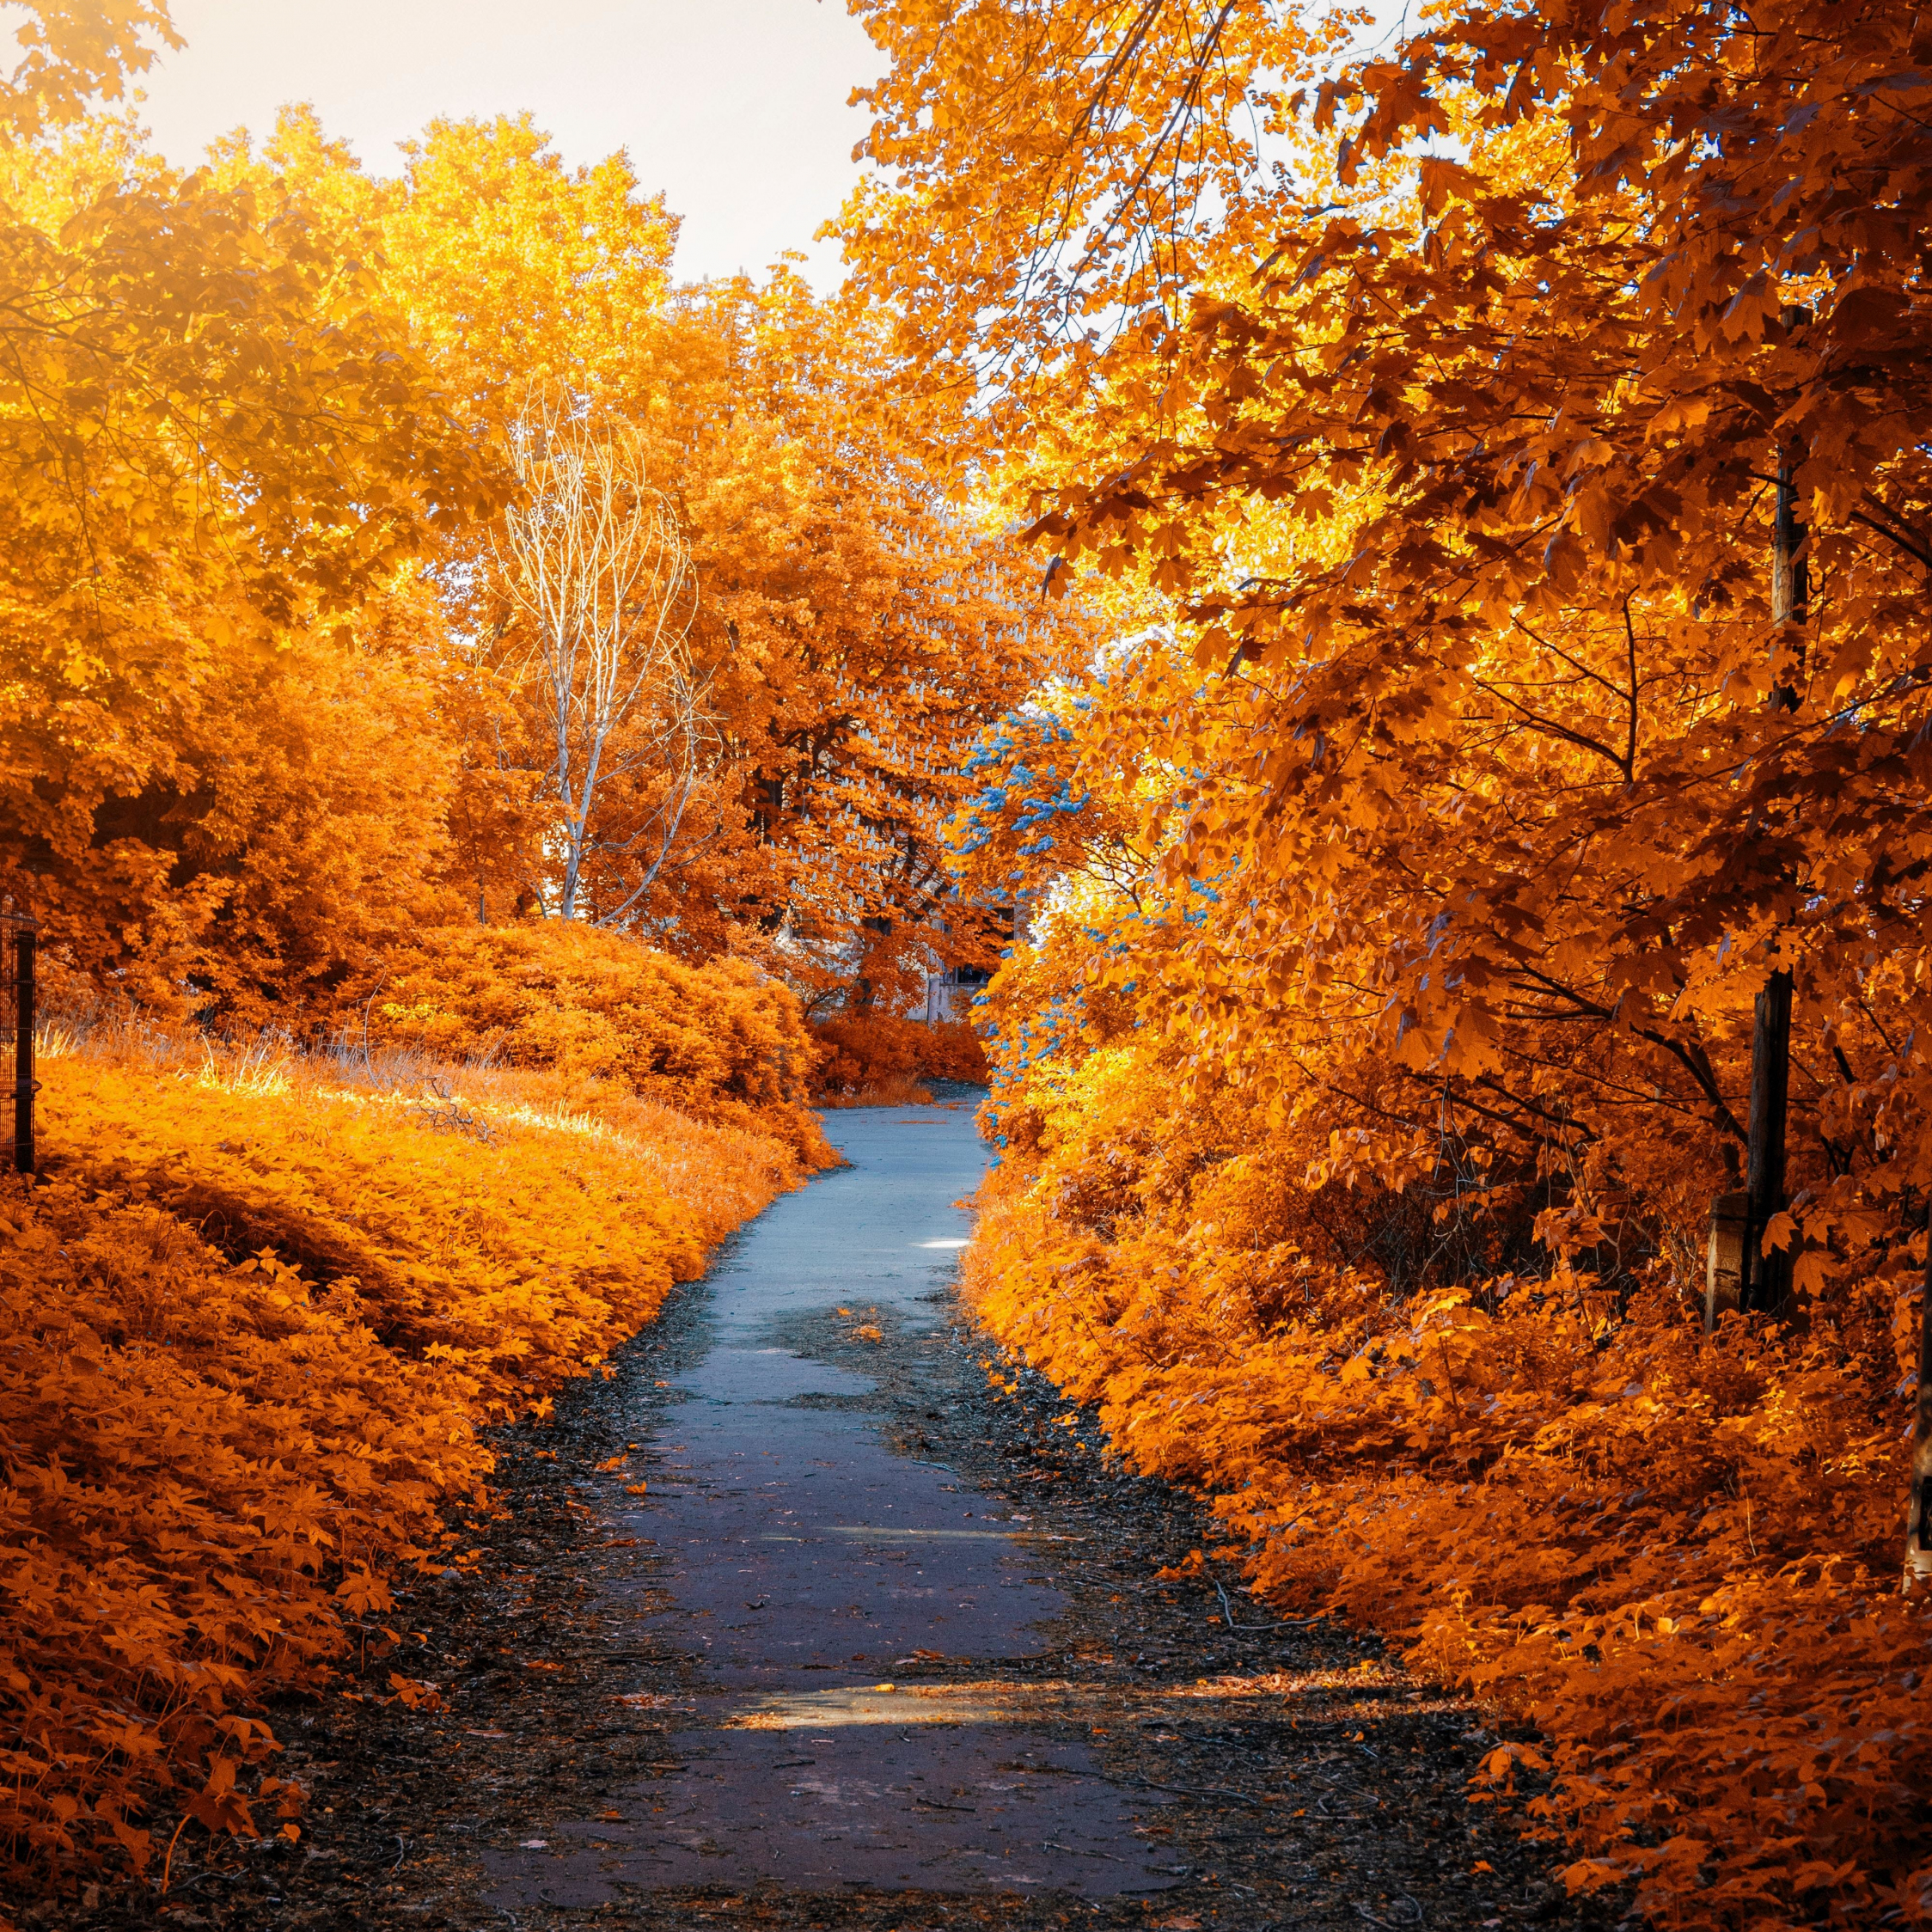 Download park, trees, foliage, autumn, pathway, leaves 2248x2248 wallpaper, ipad air, ipad air ipad ipad ipad mini ipad mini 2248x2248 HD image, background, 15327